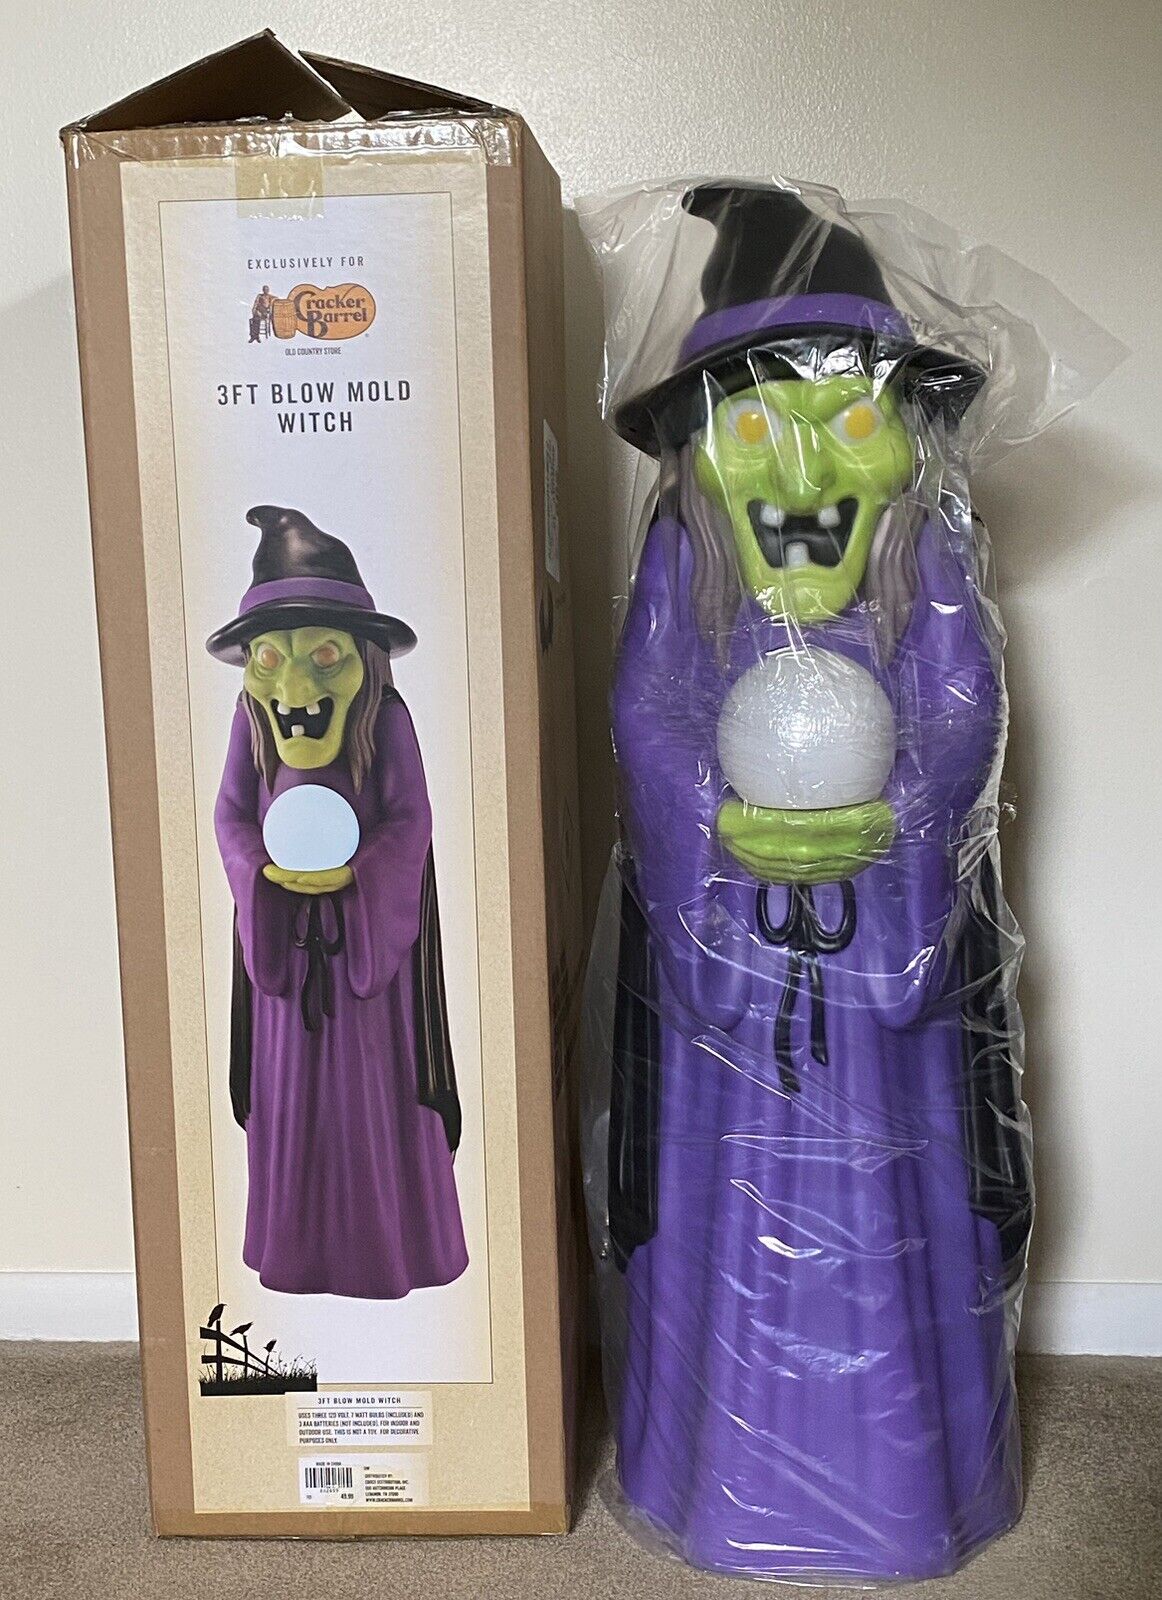 2024 NIB Cracker Barrel Witch Blow Mold Halloween 3’ w/Box(will use to mail UPS)